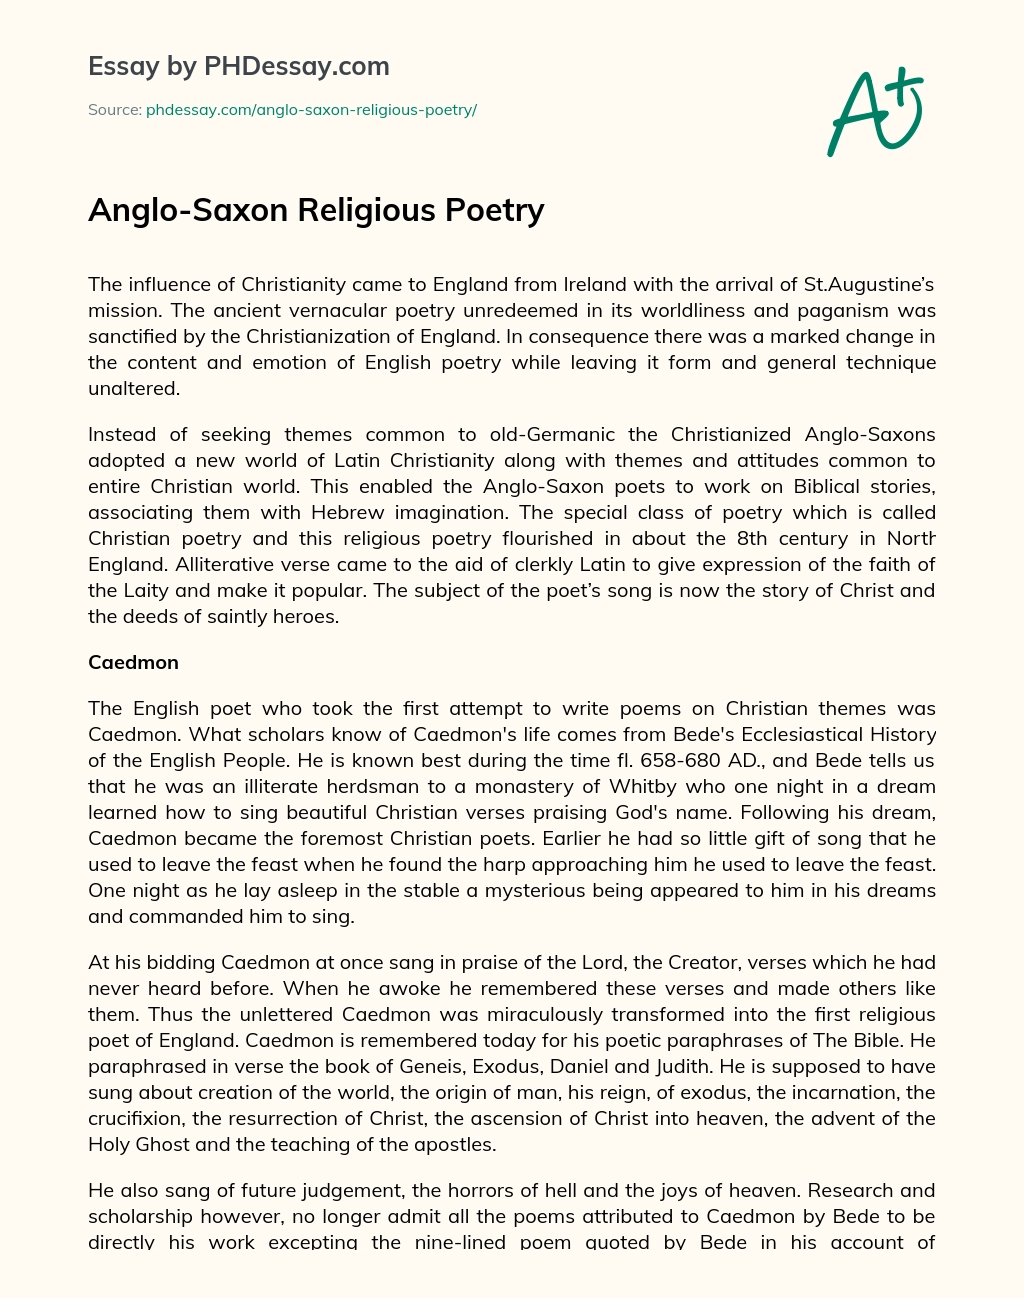 Anglo-Saxon Religious Poetry essay